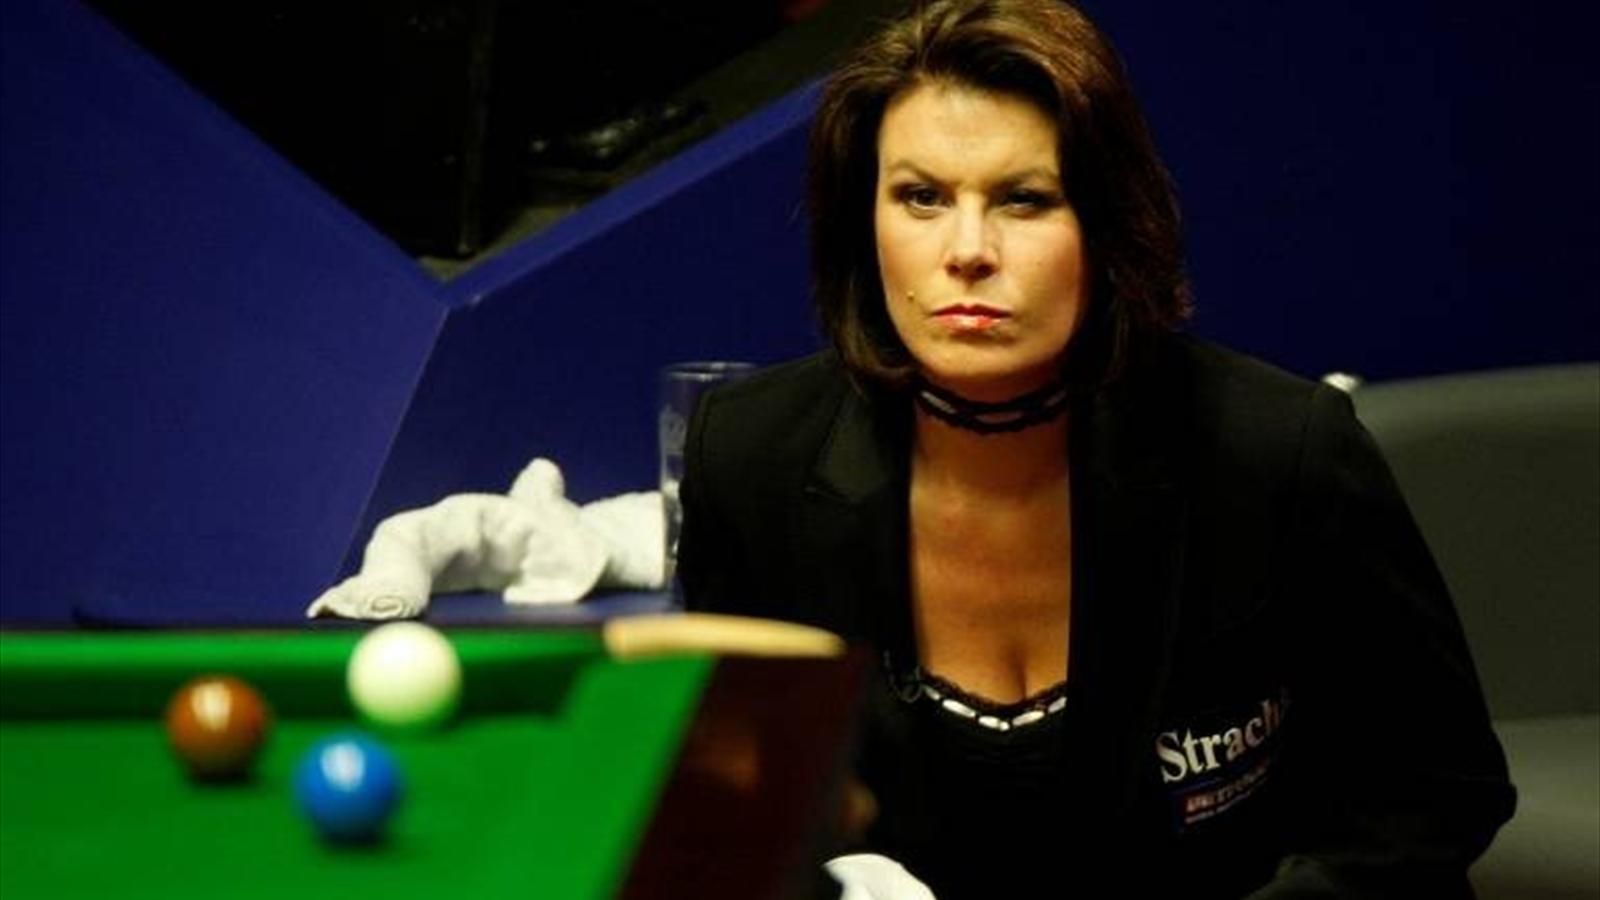 Snooker, my love Michaela Tabb brings World Snooker to court